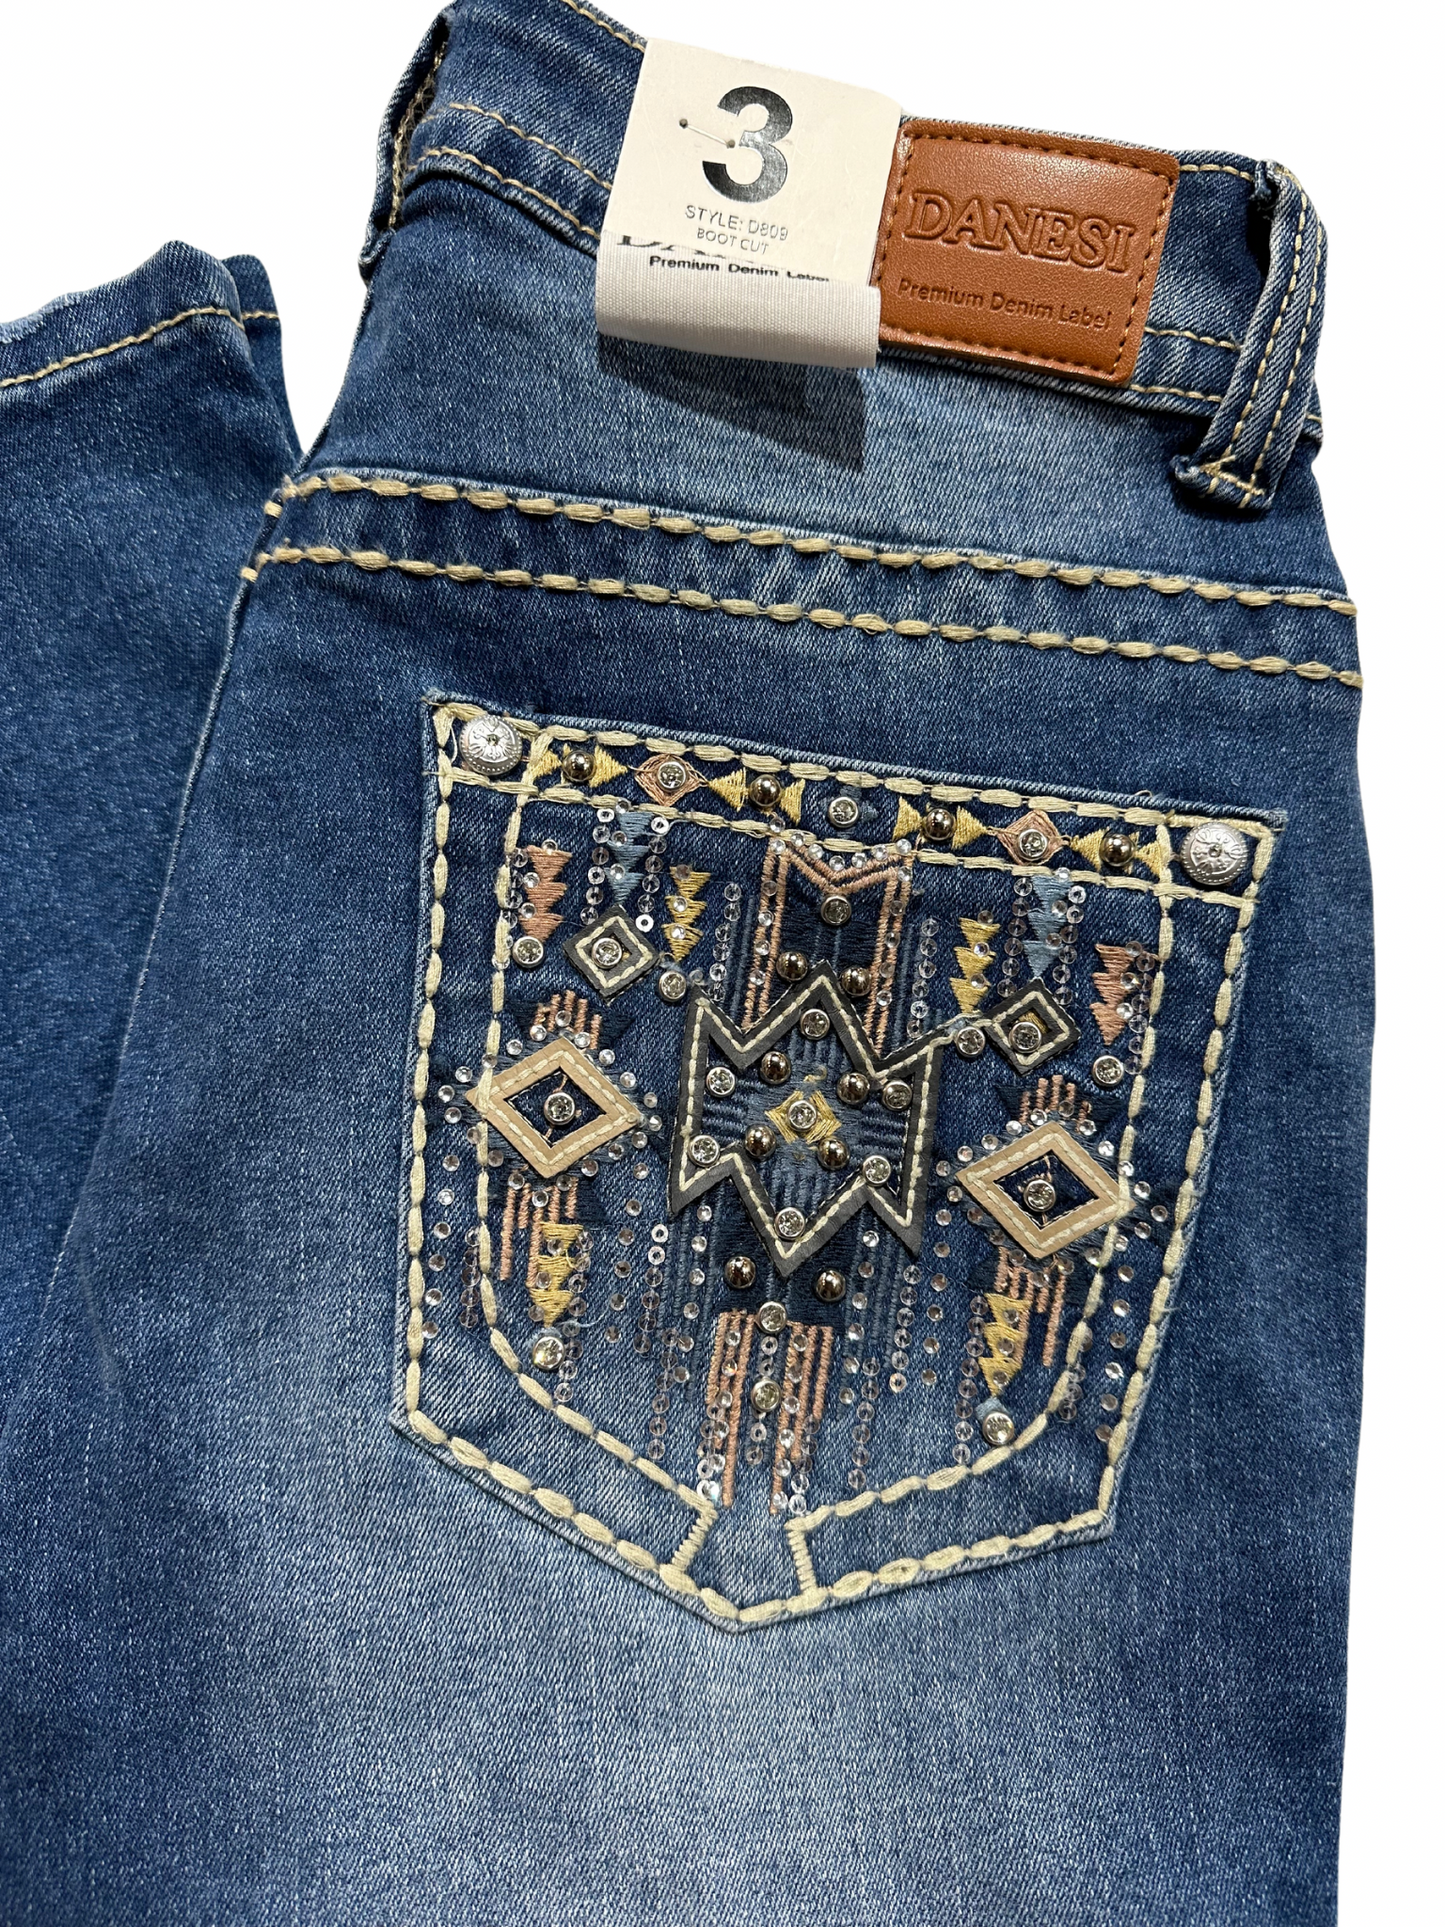 Danesi Medium Blue Bling Pocket Bootcut Jean